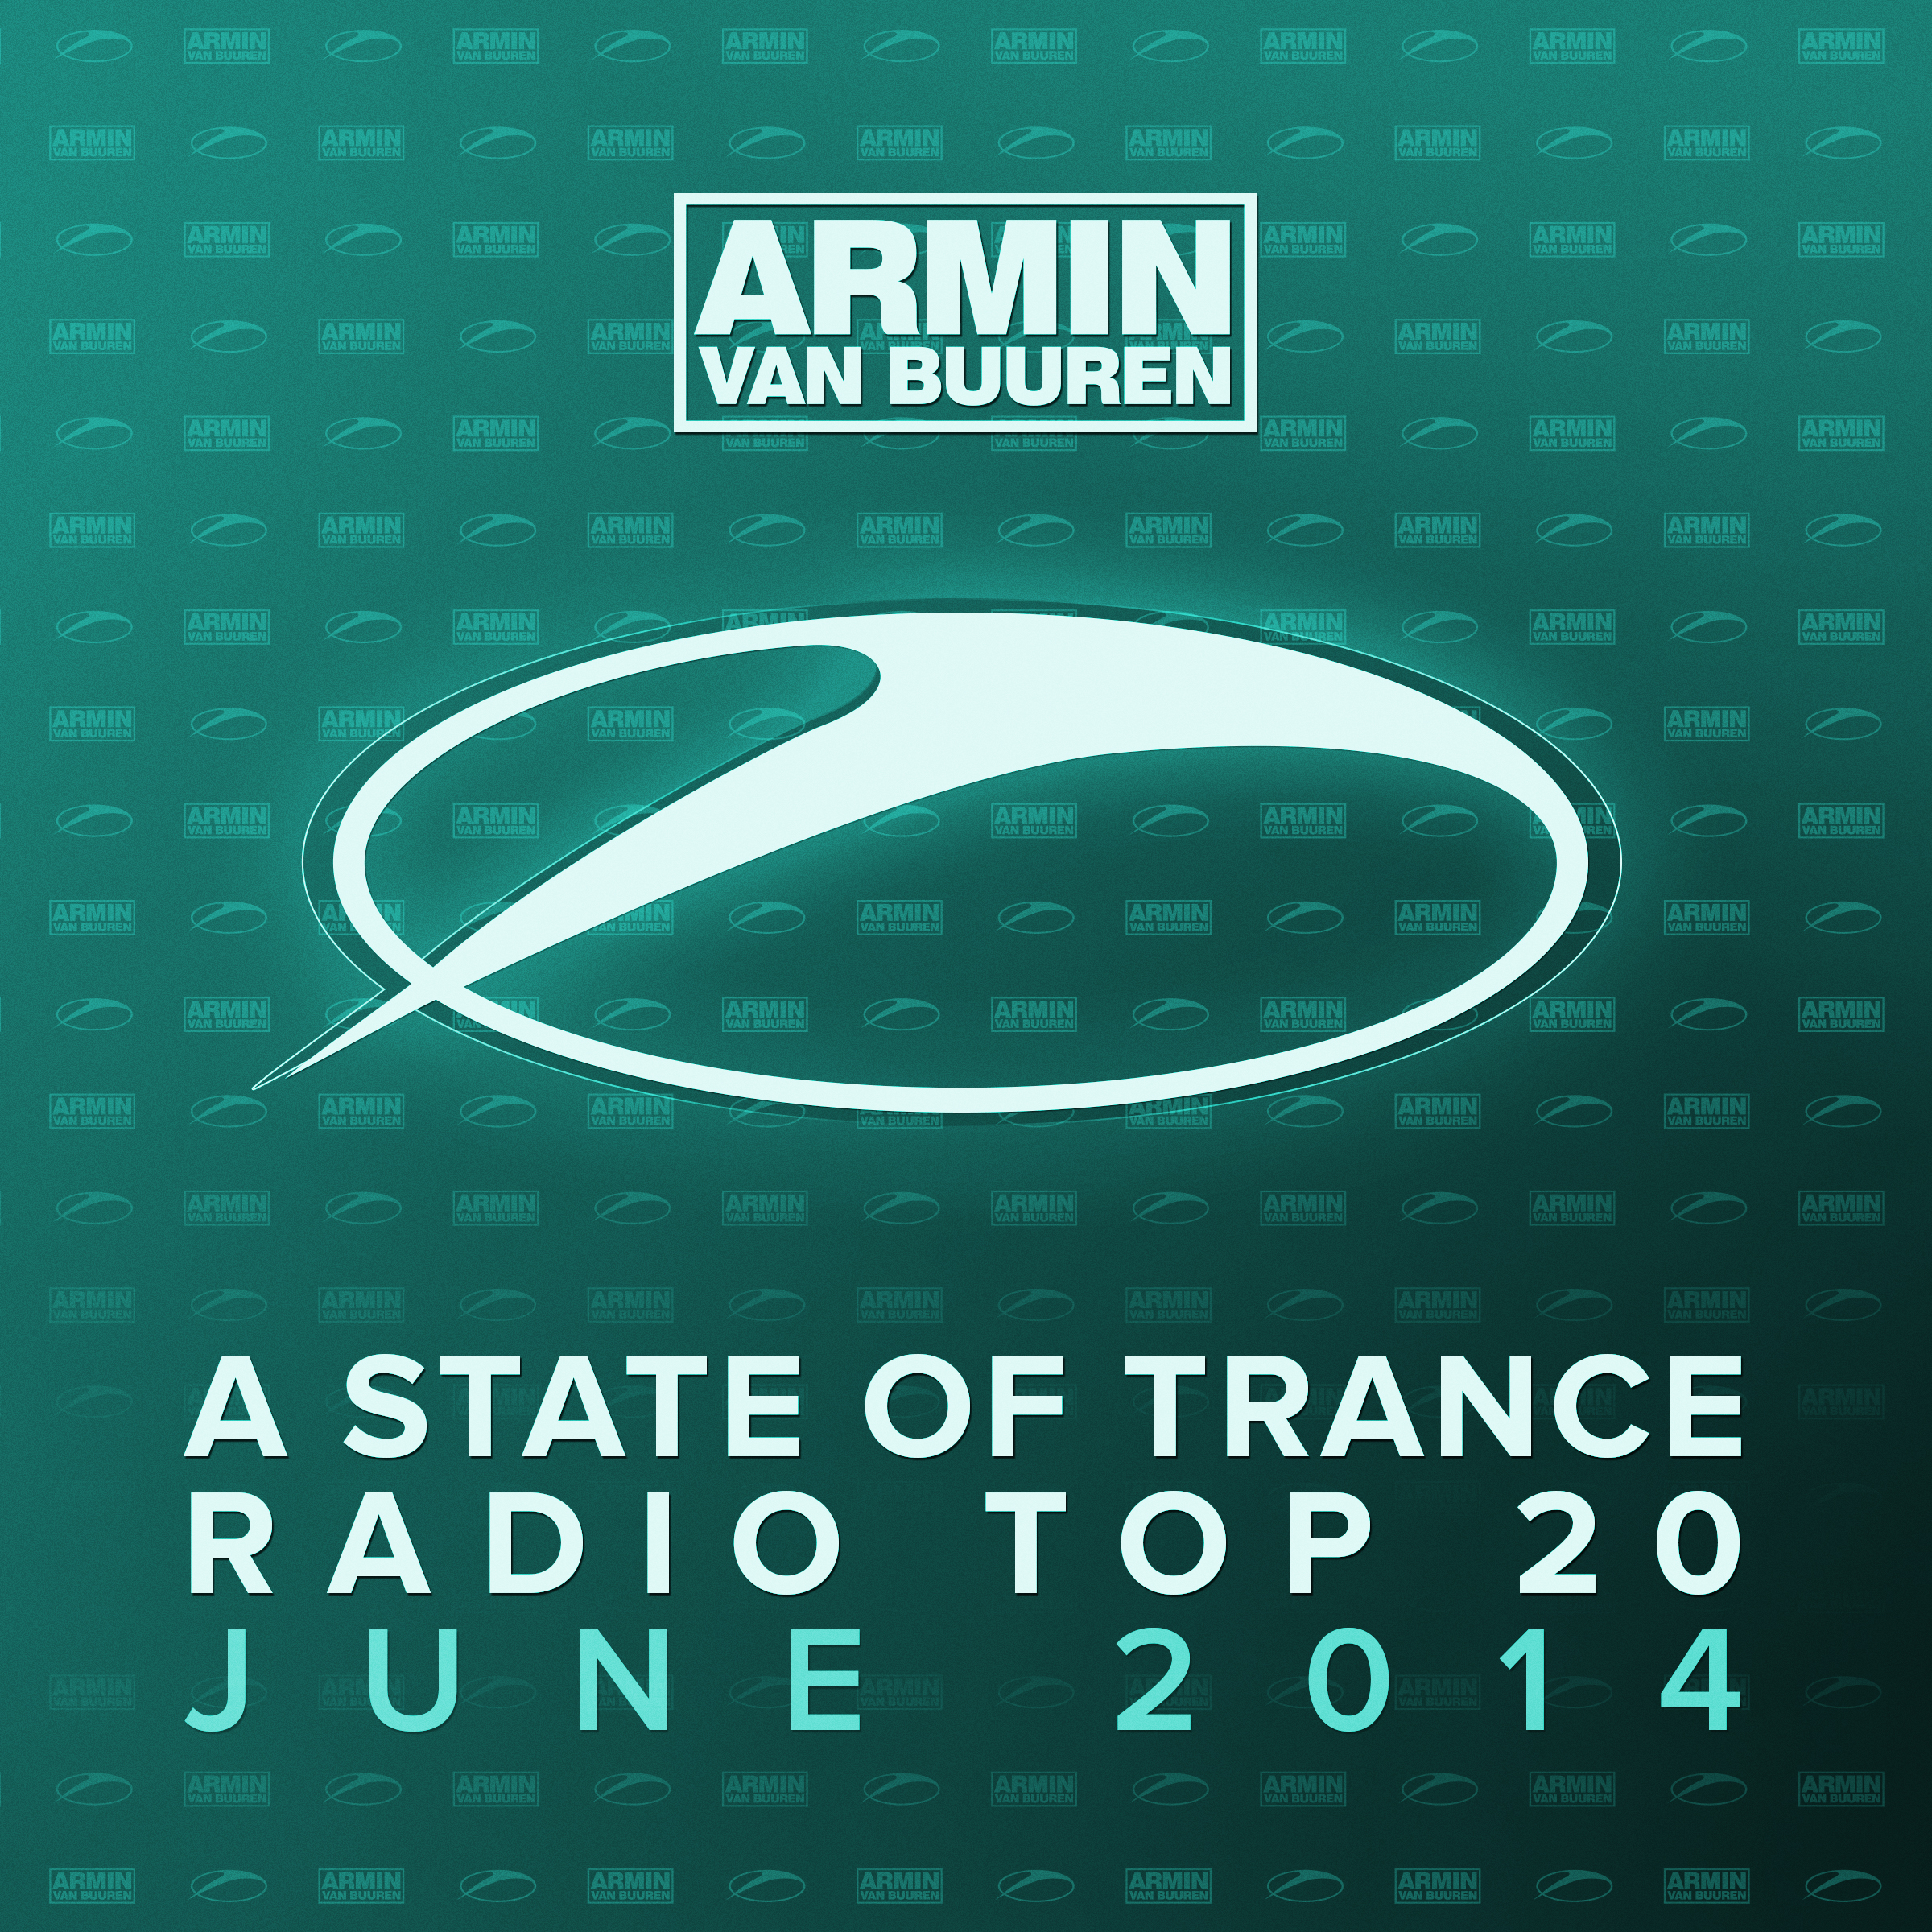 Tsitsani Armin van Buuren & Andrew Rayel - EIFORYA (Ben Gold Remix) [ASOT Radio Top 20 - June 2014]